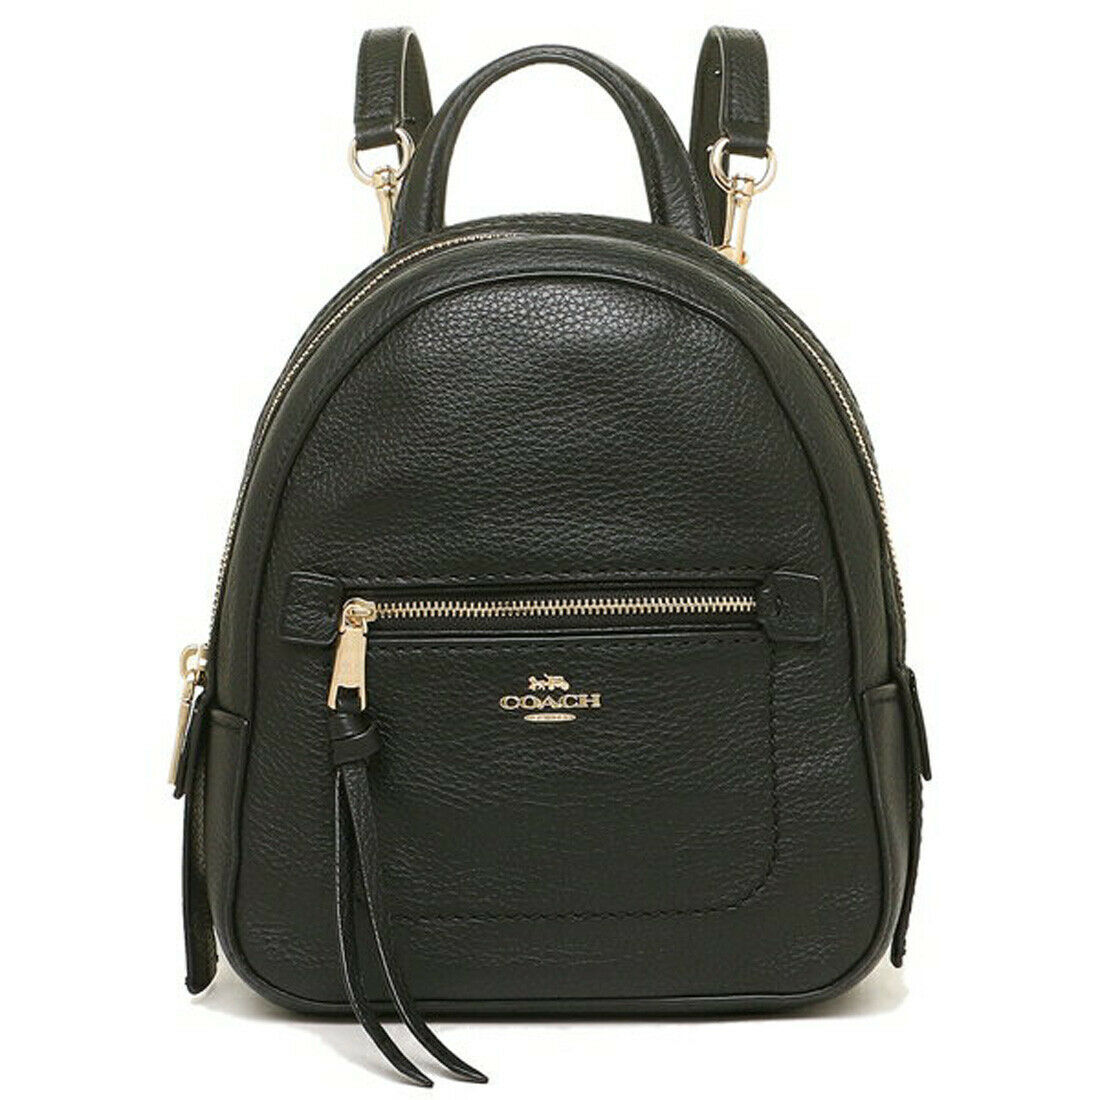 NWT COACH Andi Backpack Small Cute Crossbody Shoulder Bag Black Gold F30530 NEW - $127.71